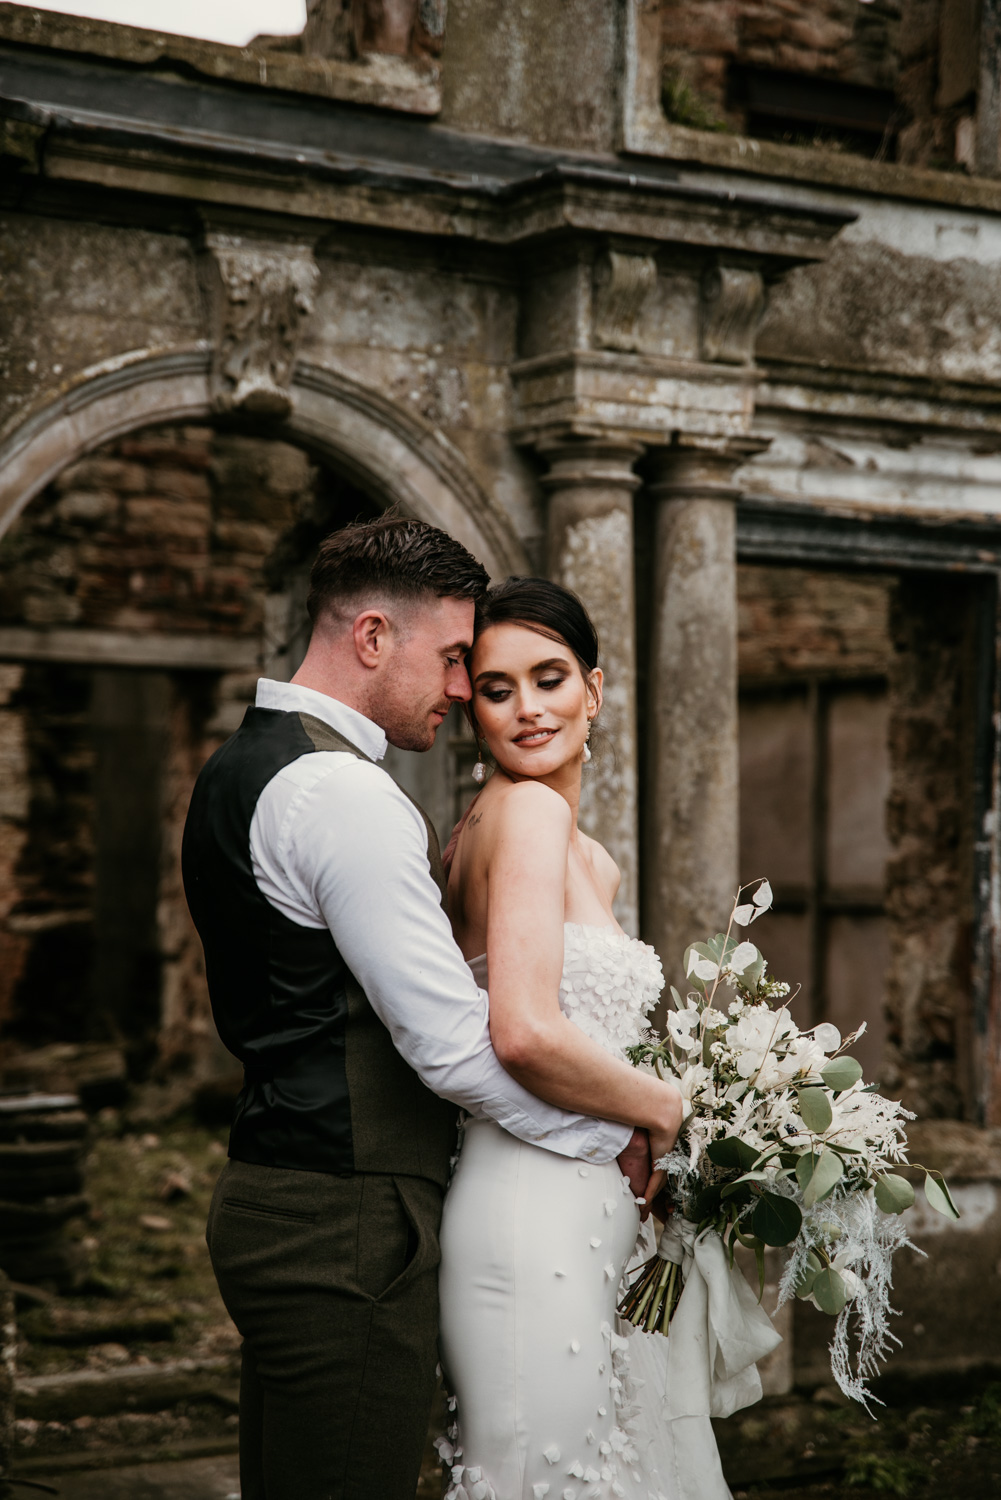 Intimate Outdoor Wedding at Kirklinton Hall, Lake District